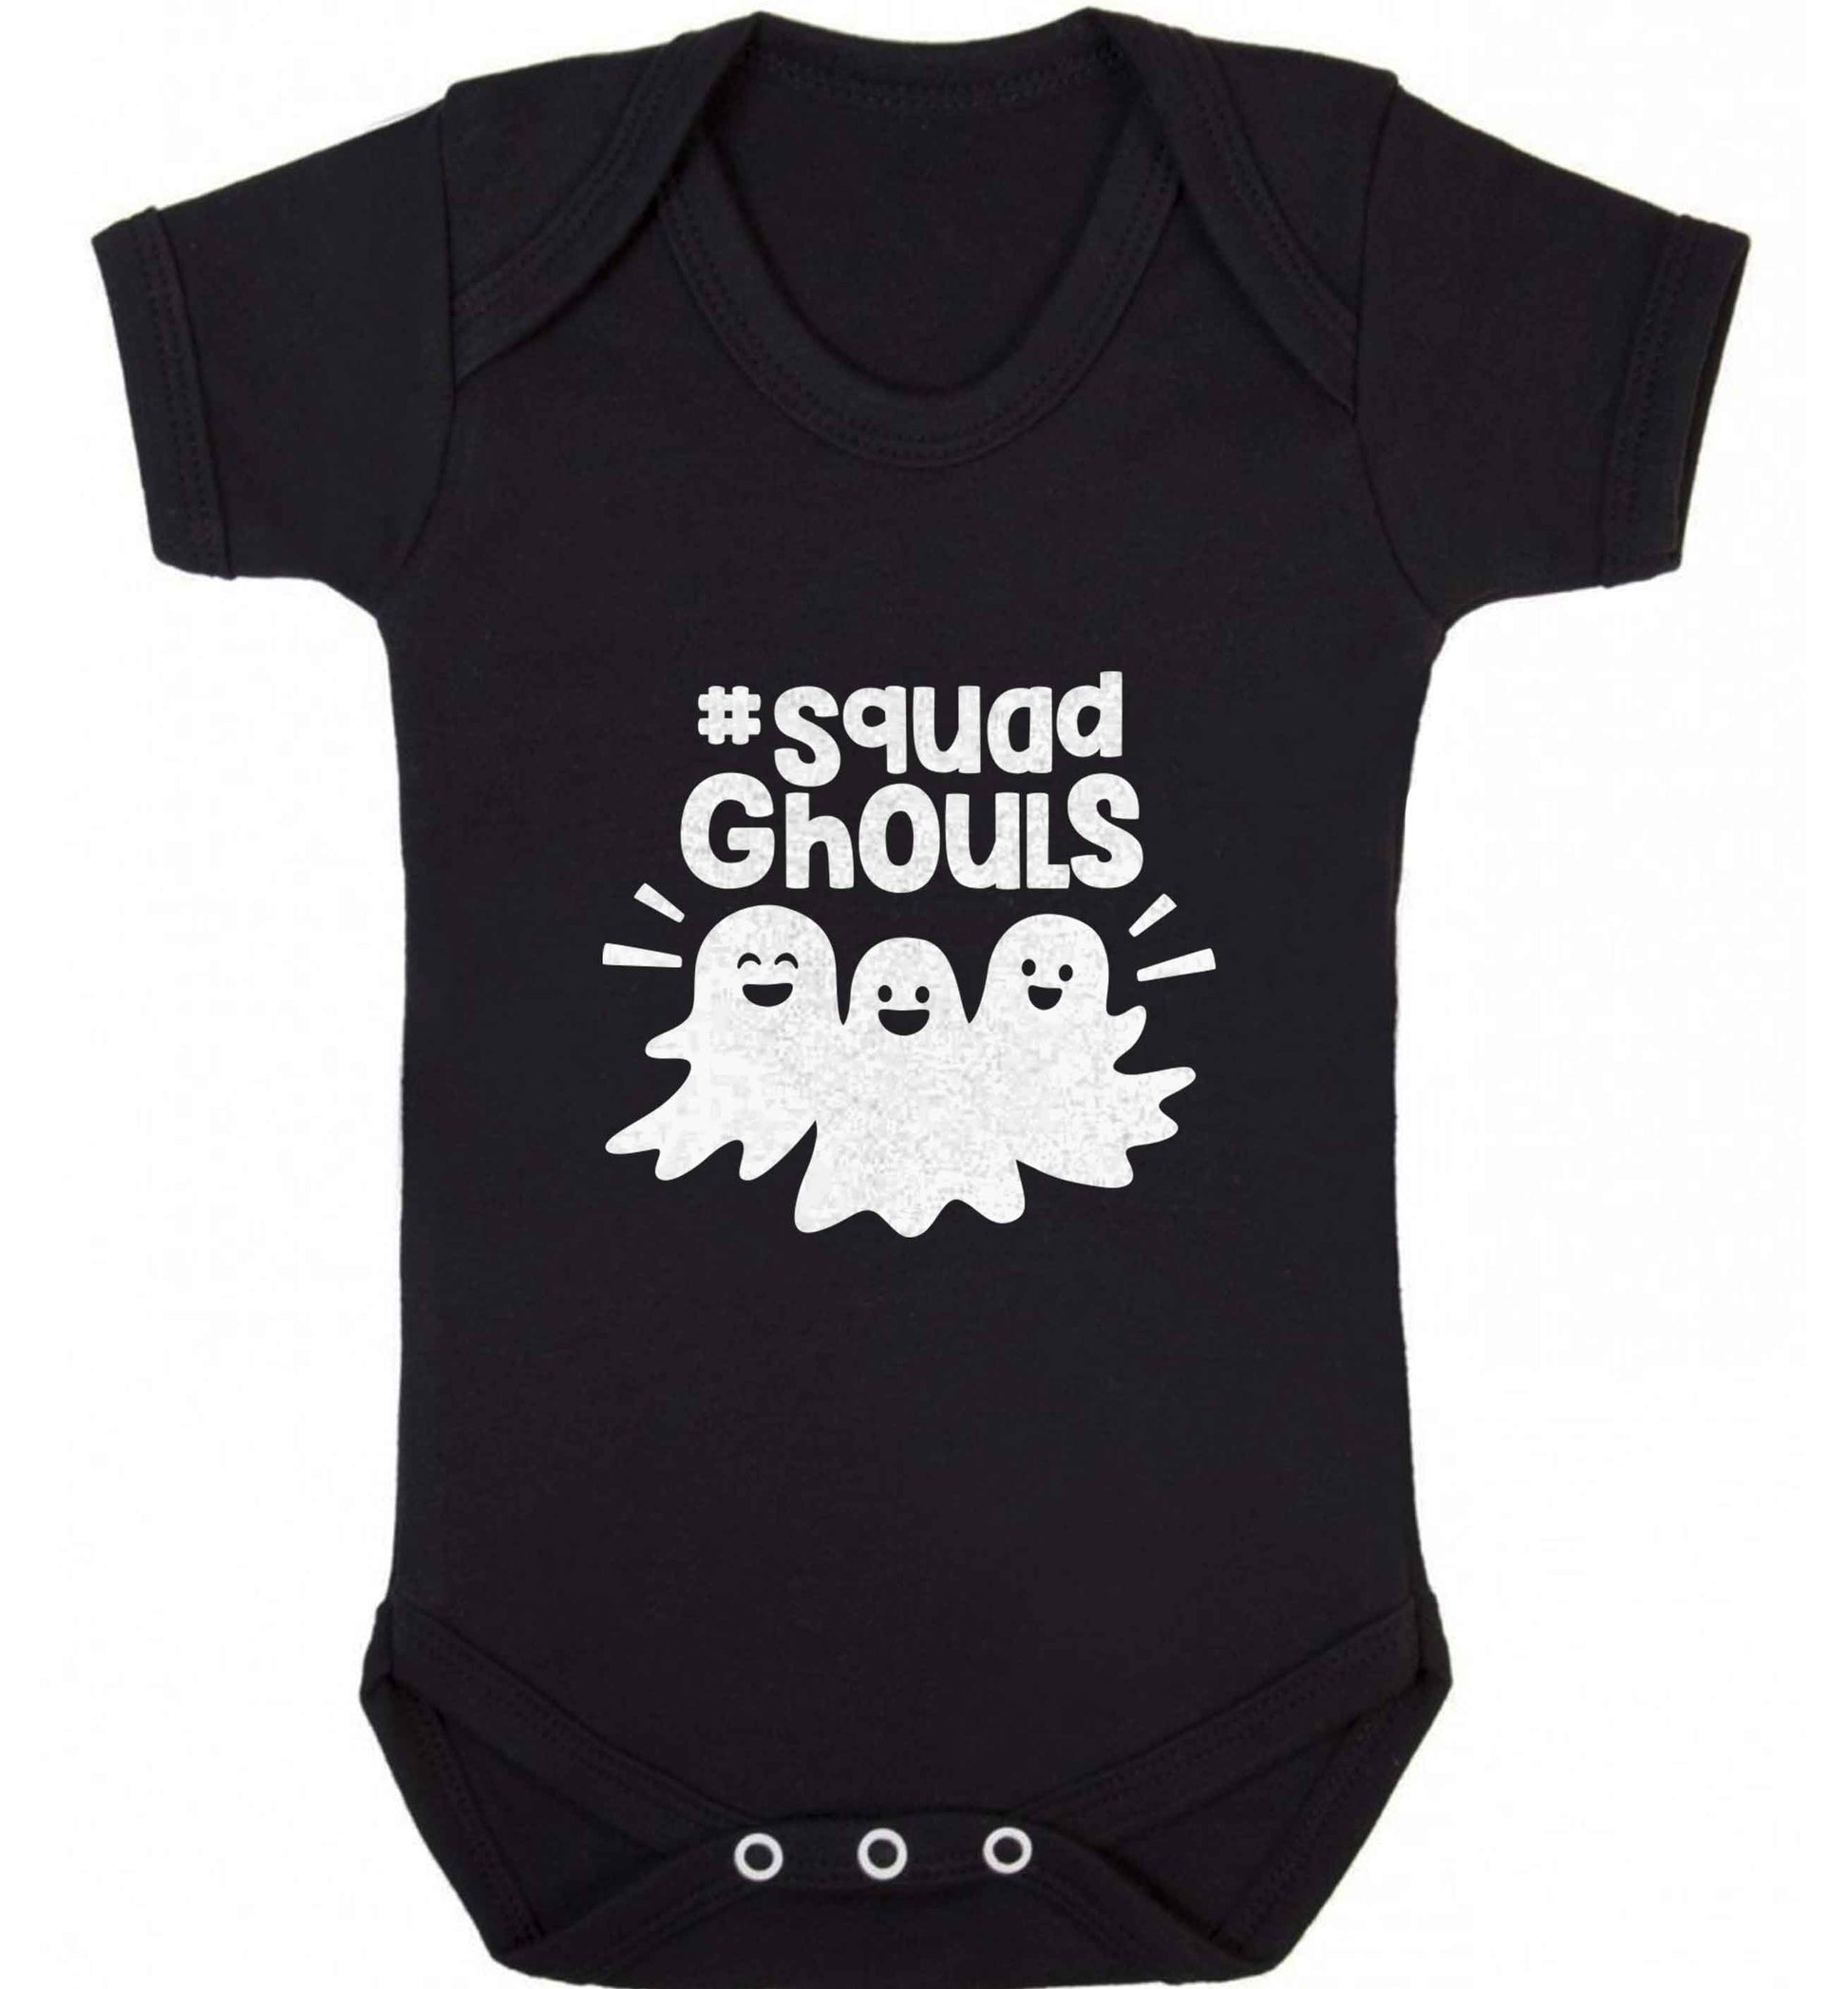 Squad ghouls Kit baby vest black 18-24 months